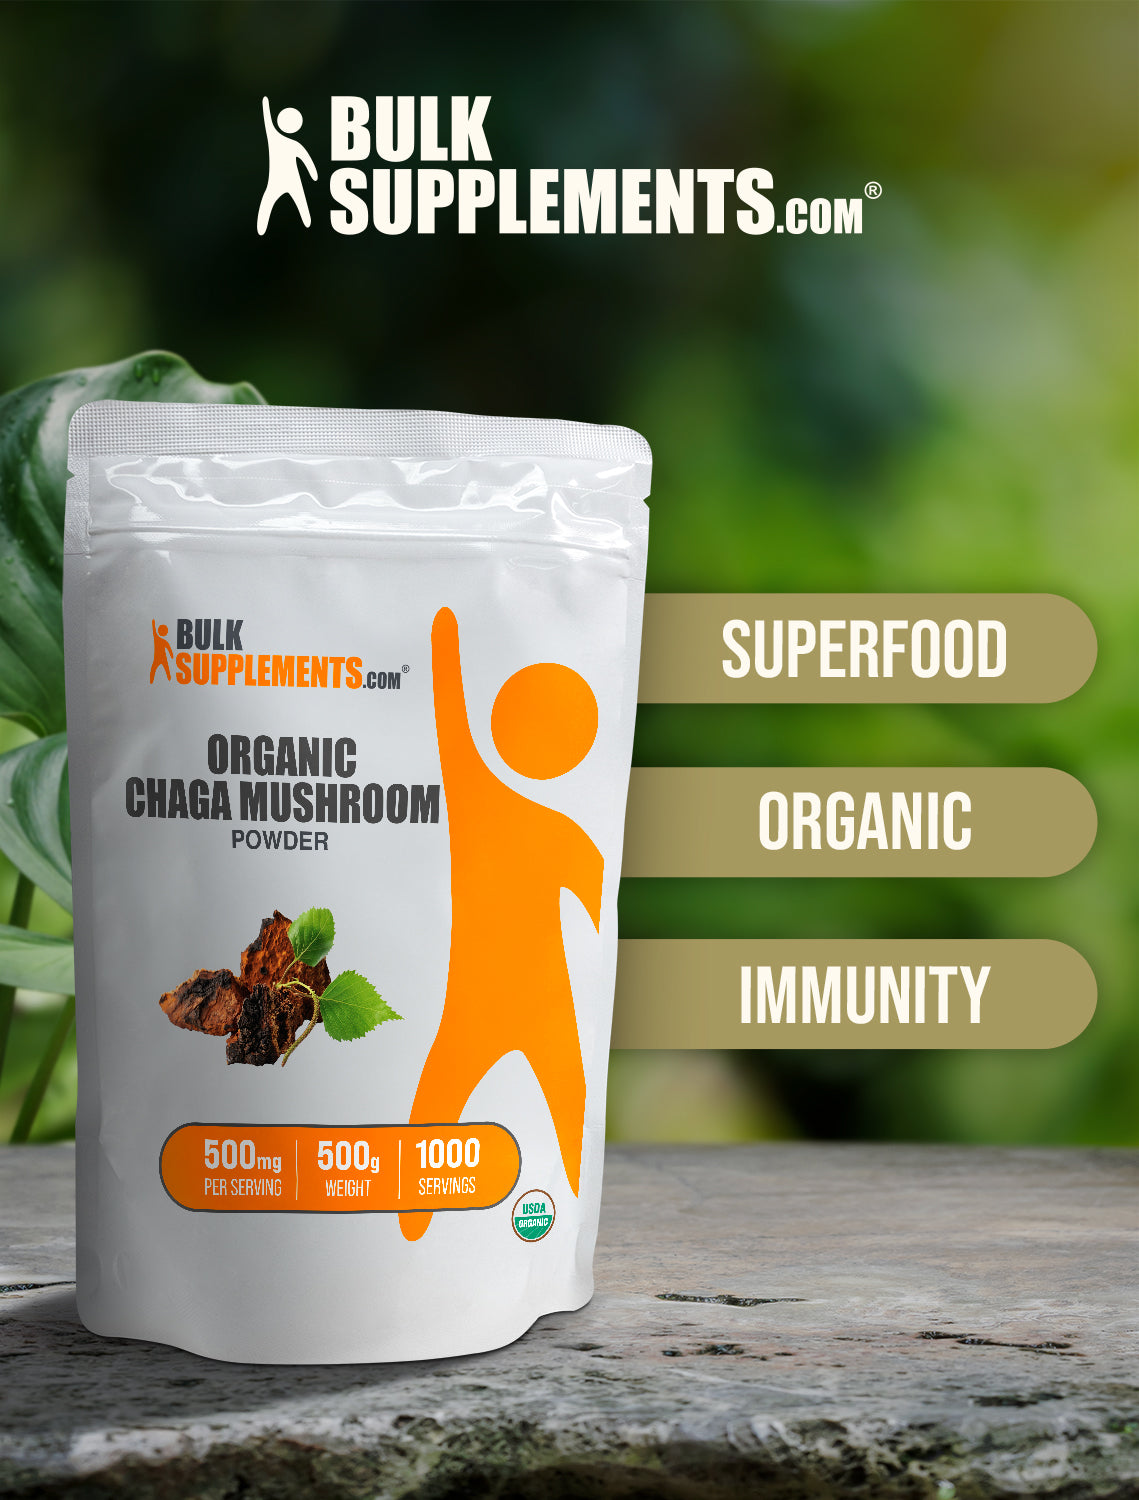 Organic chaga mushroom powder keyword image 500g